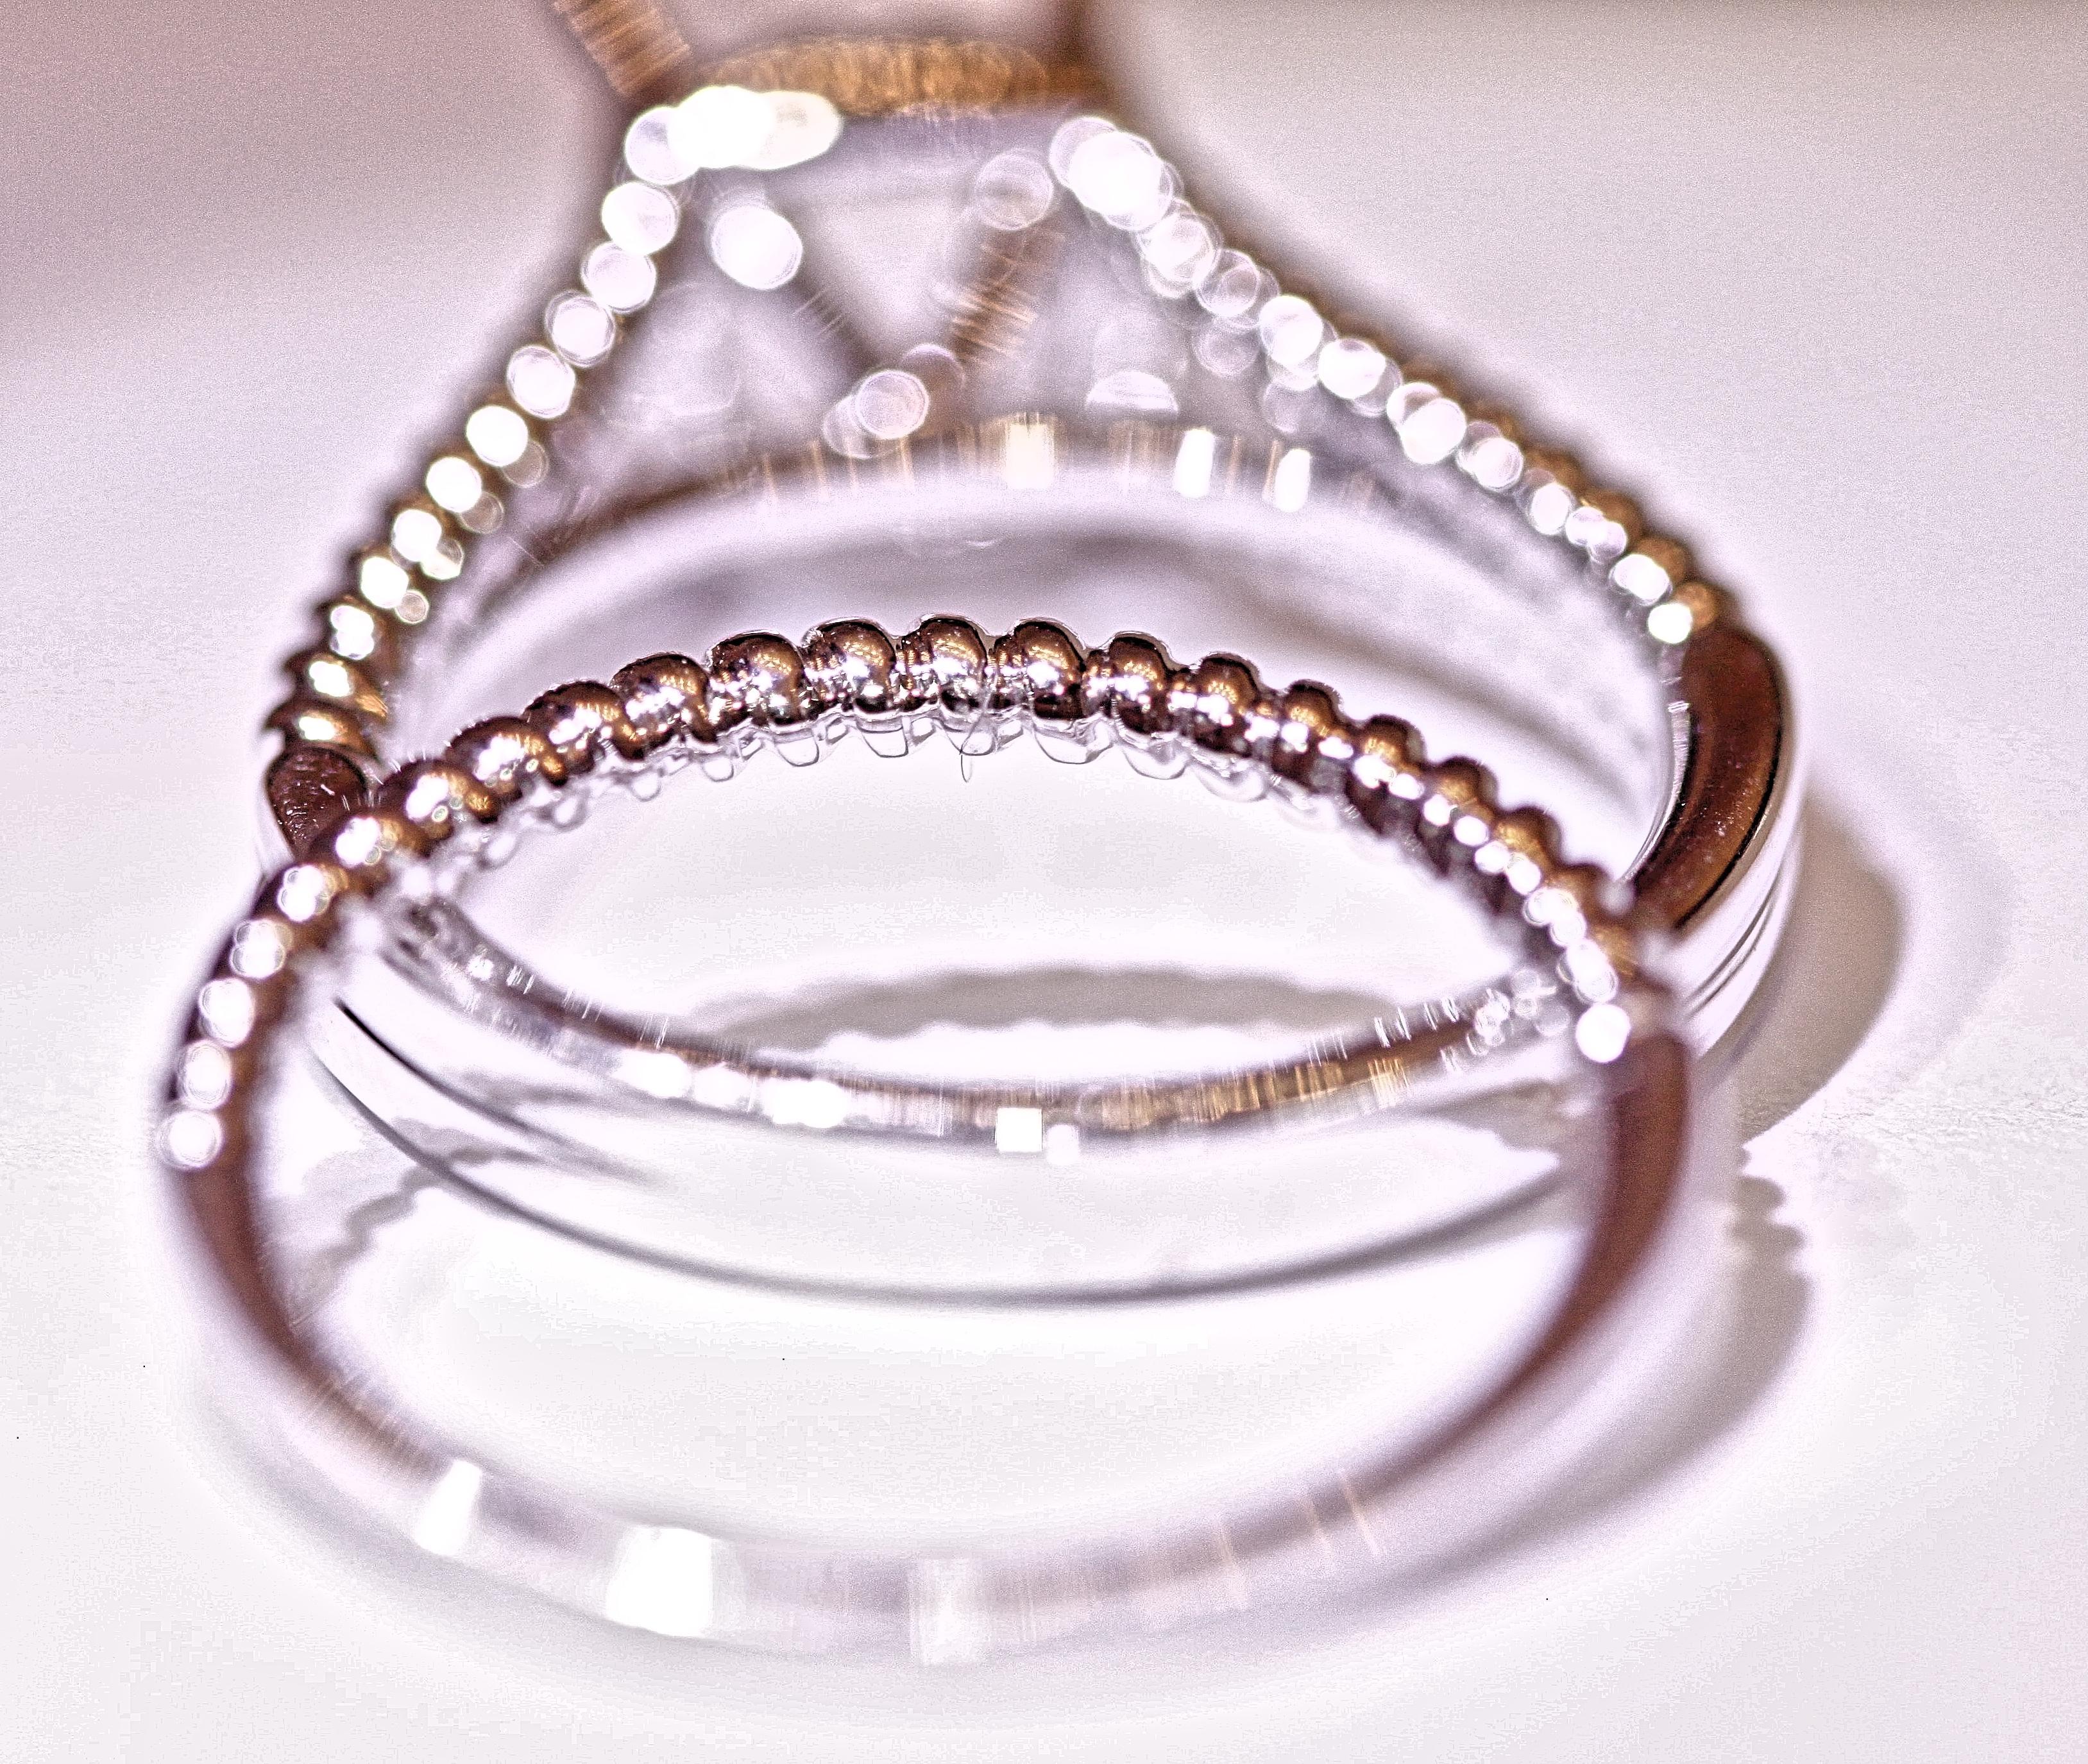 Round Cut Diamond Engagement Ring Wedding Band 14 Karat White Gold .15 Carat Total Weight For Sale